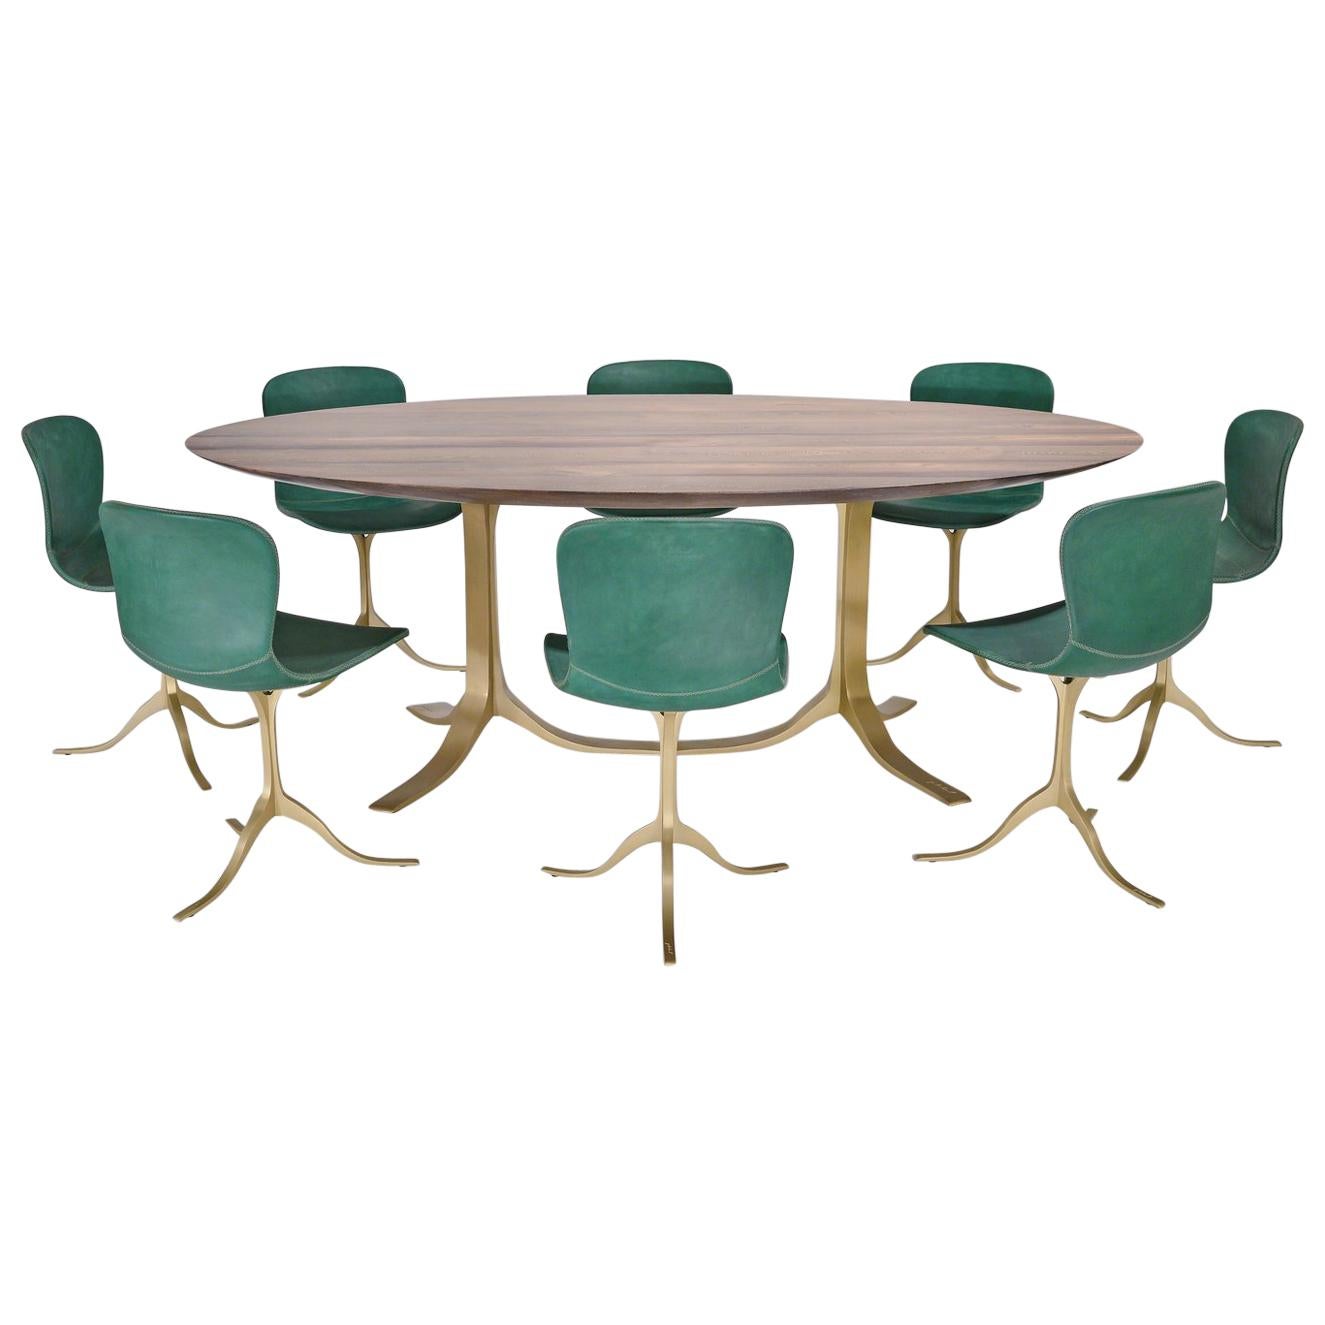 Bespoke Oval Table, Reclaimed Hardwood, Brown Brass Base, P. Tendercool In stock